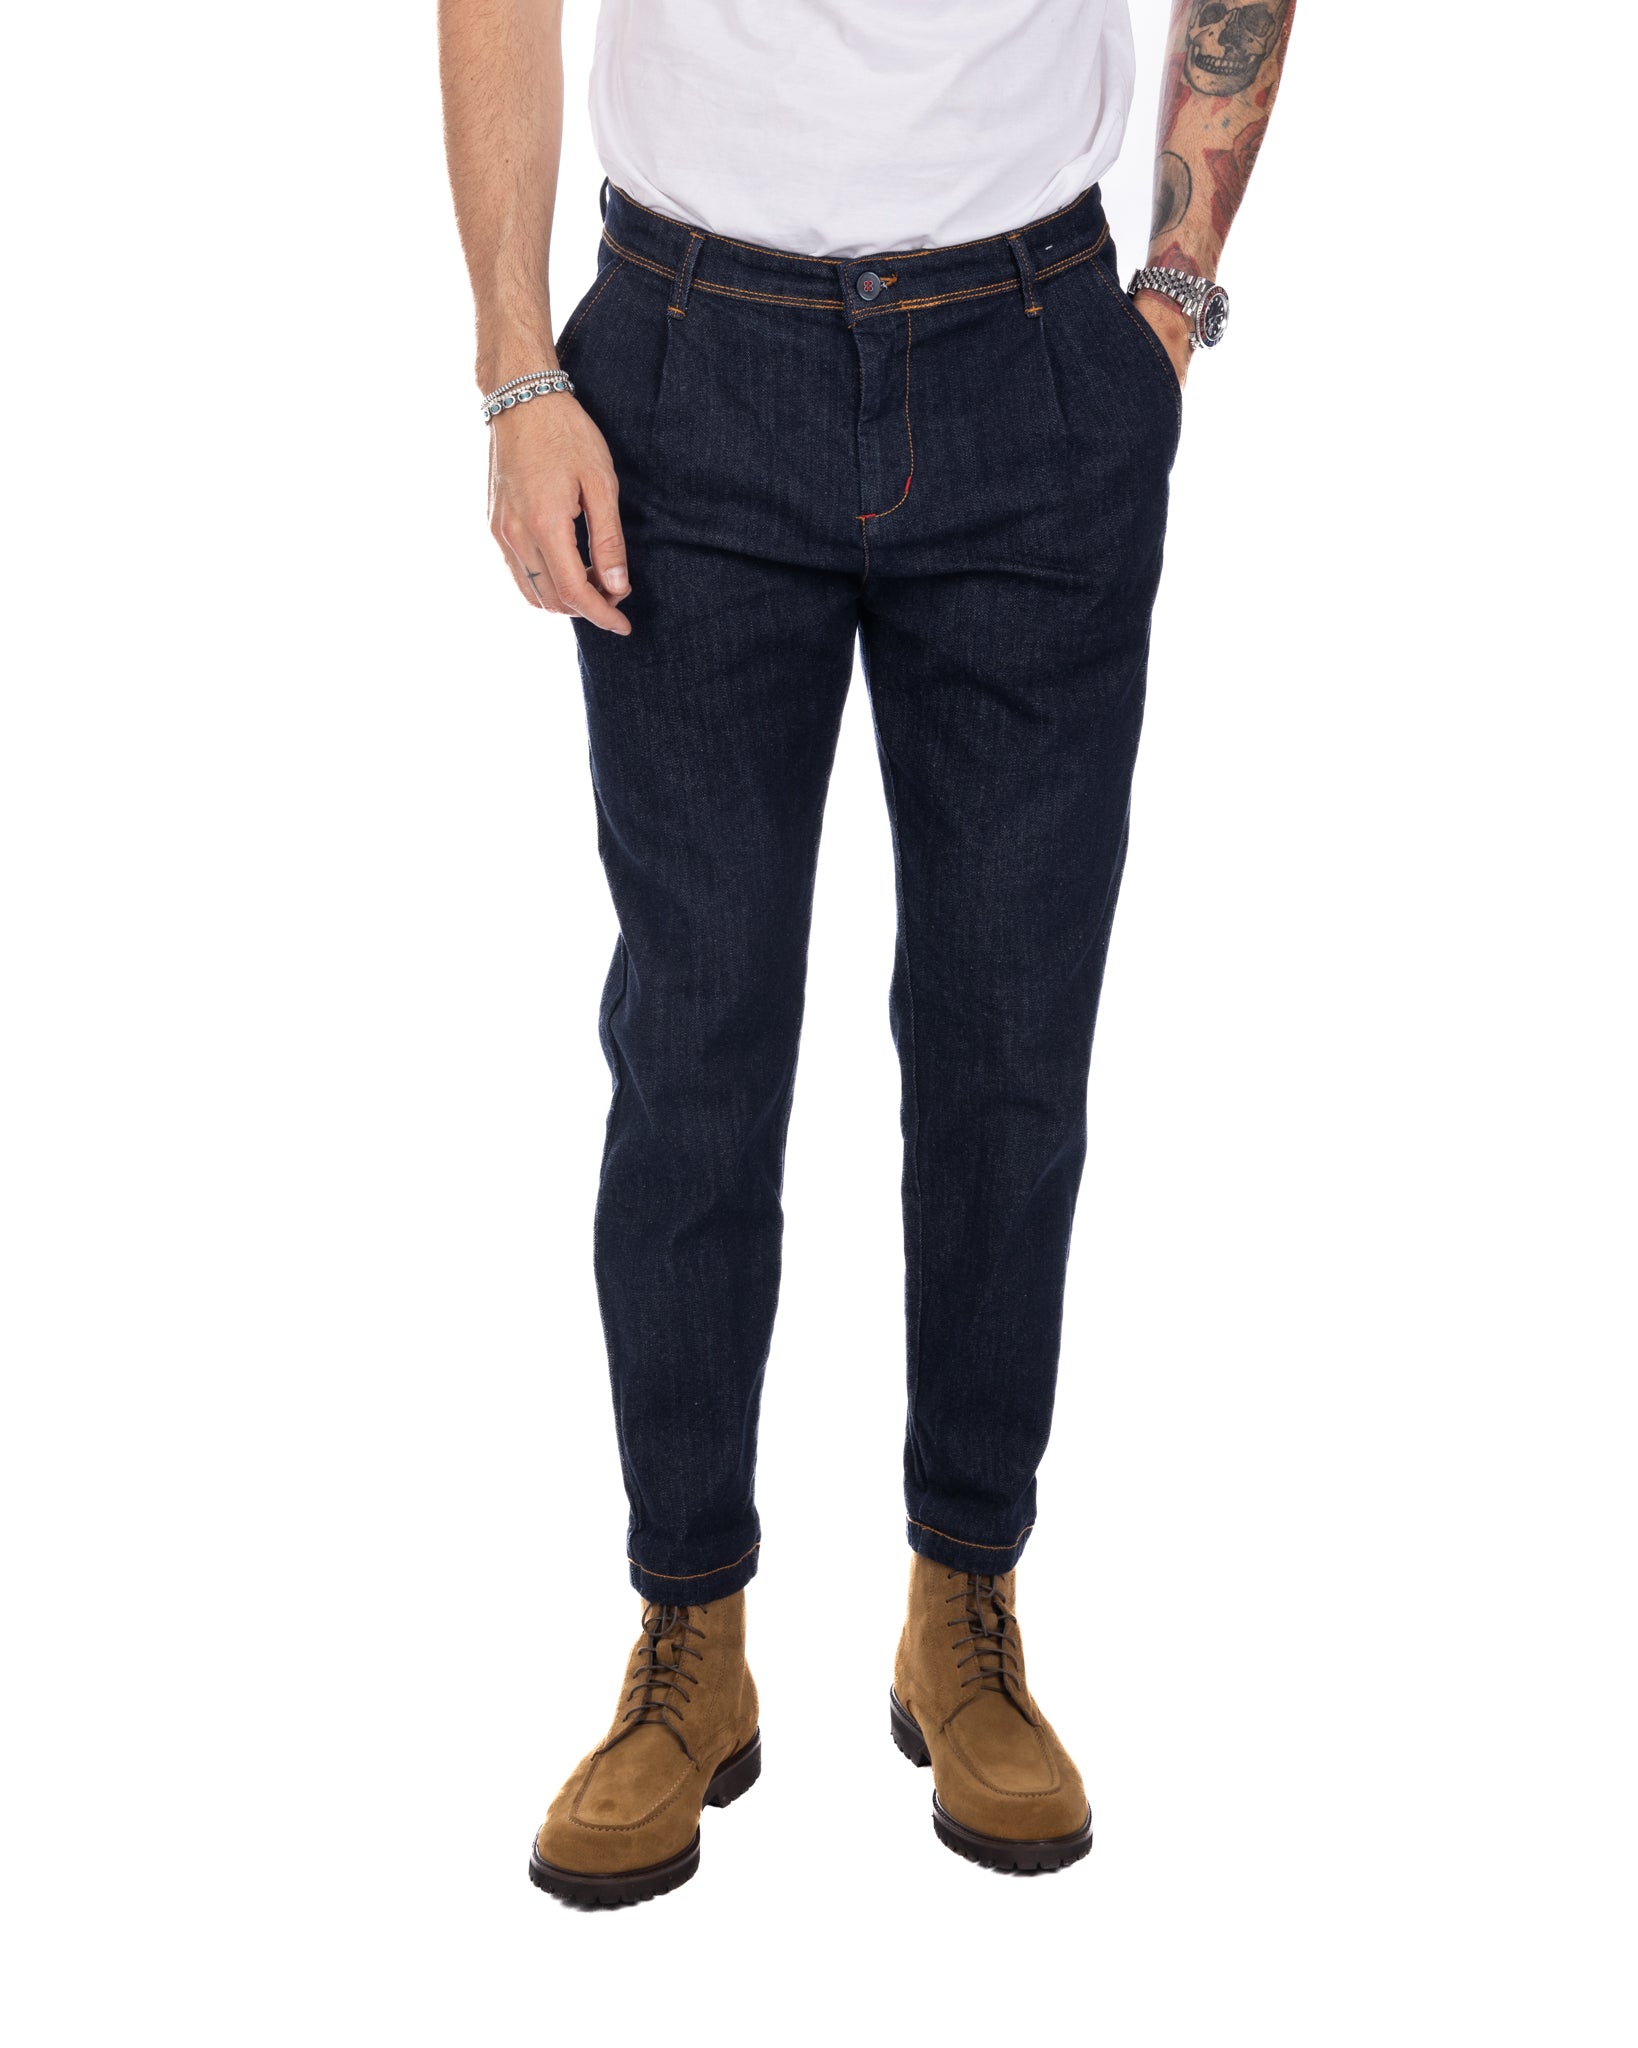 Orleans - zero wash america pocket jeans